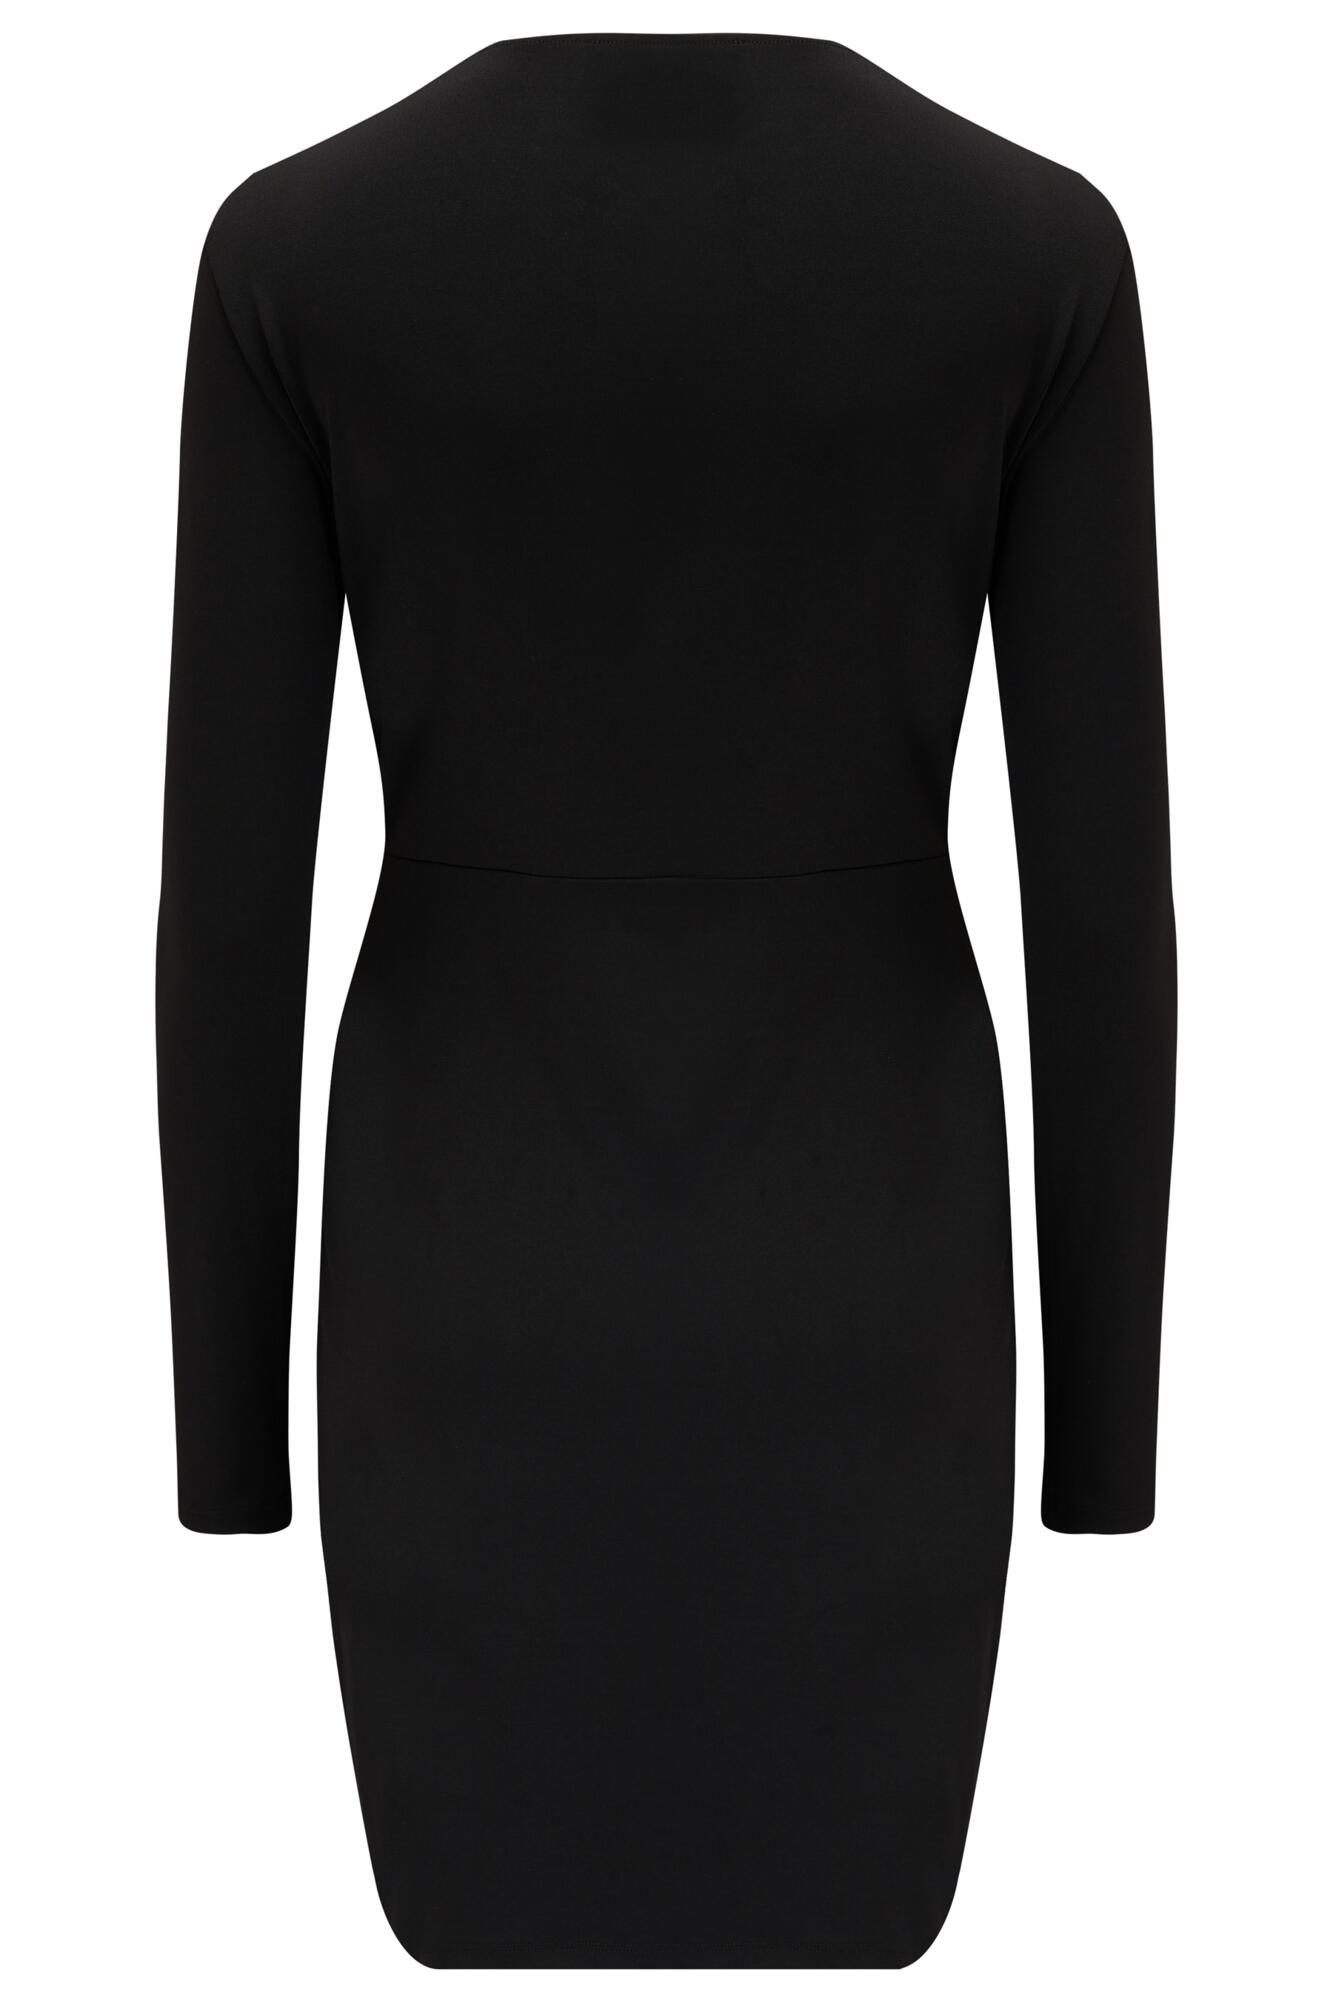 Primark Vest Top Ladies Girls Long Cami Dress Stretch Strap Black Size 6 to  24